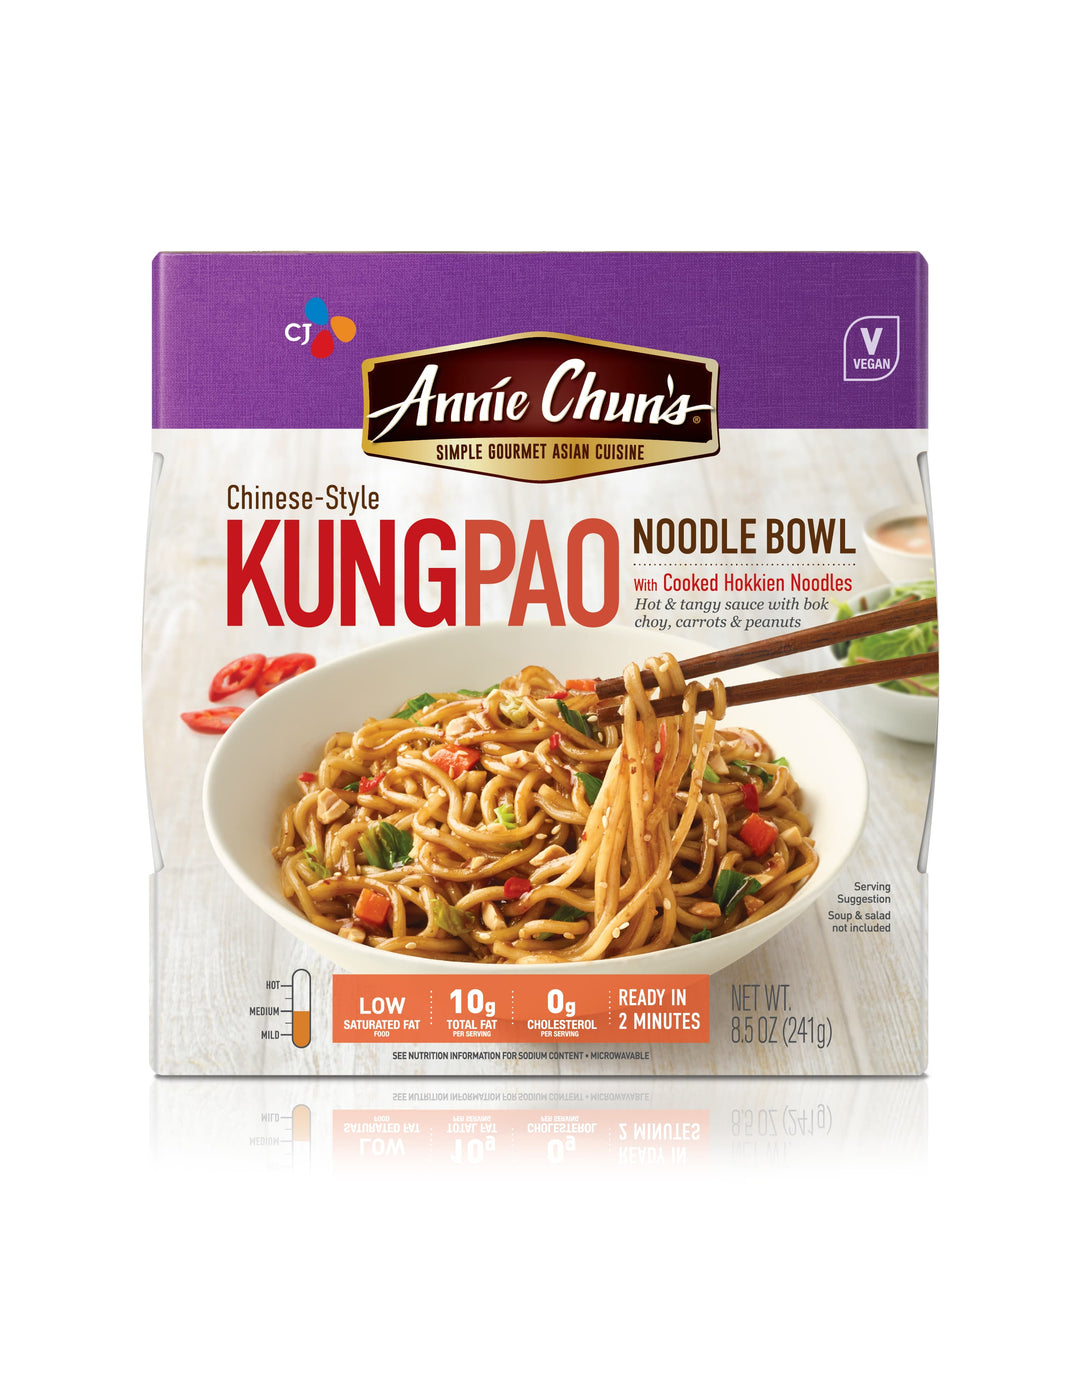 Annie Chun's Kung Pao Noodle Bowl-8.5 oz.-6/Case